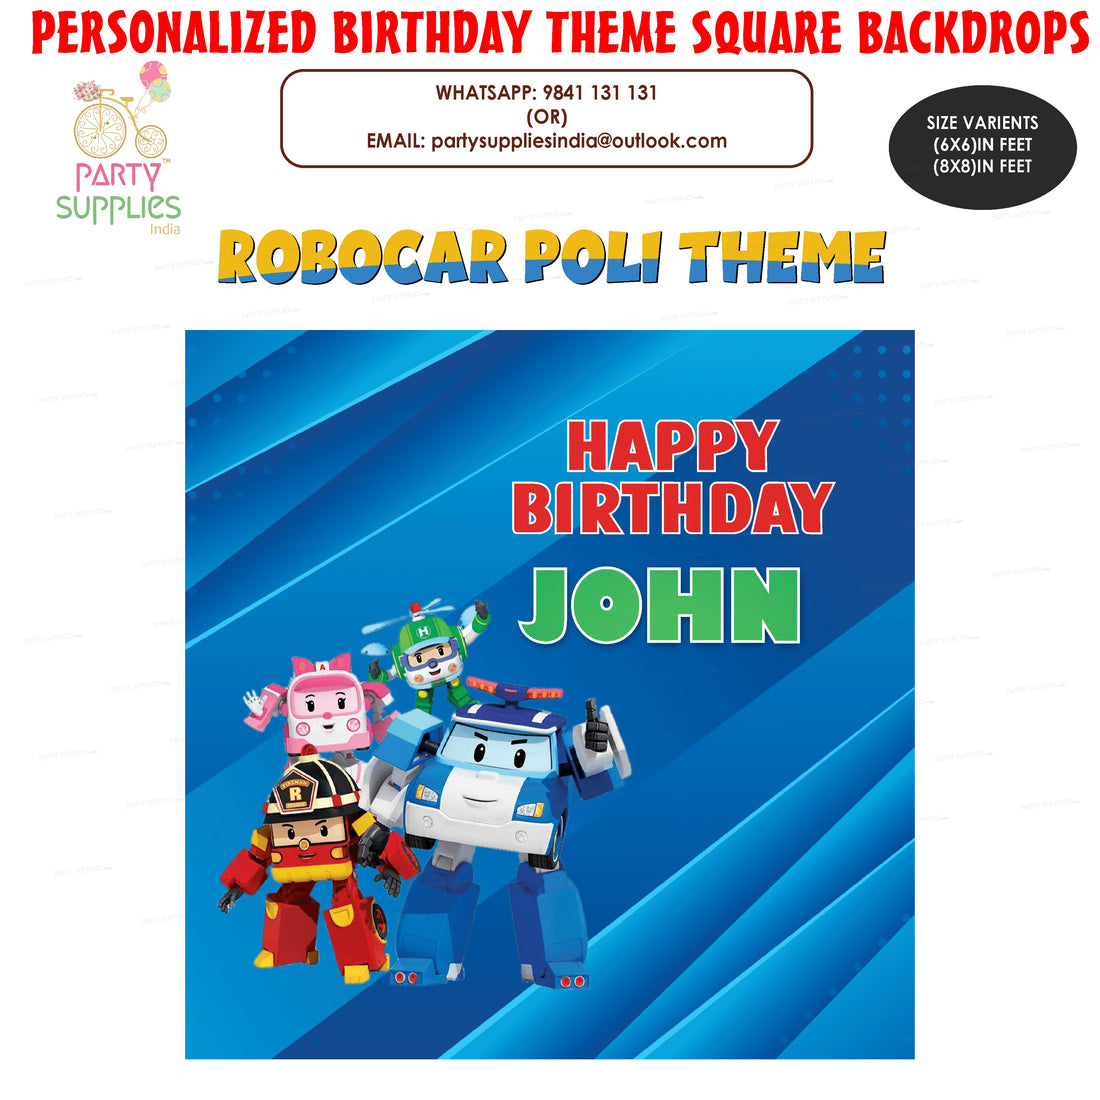 PSI Robo Poli Theme Customized Square Backdrop